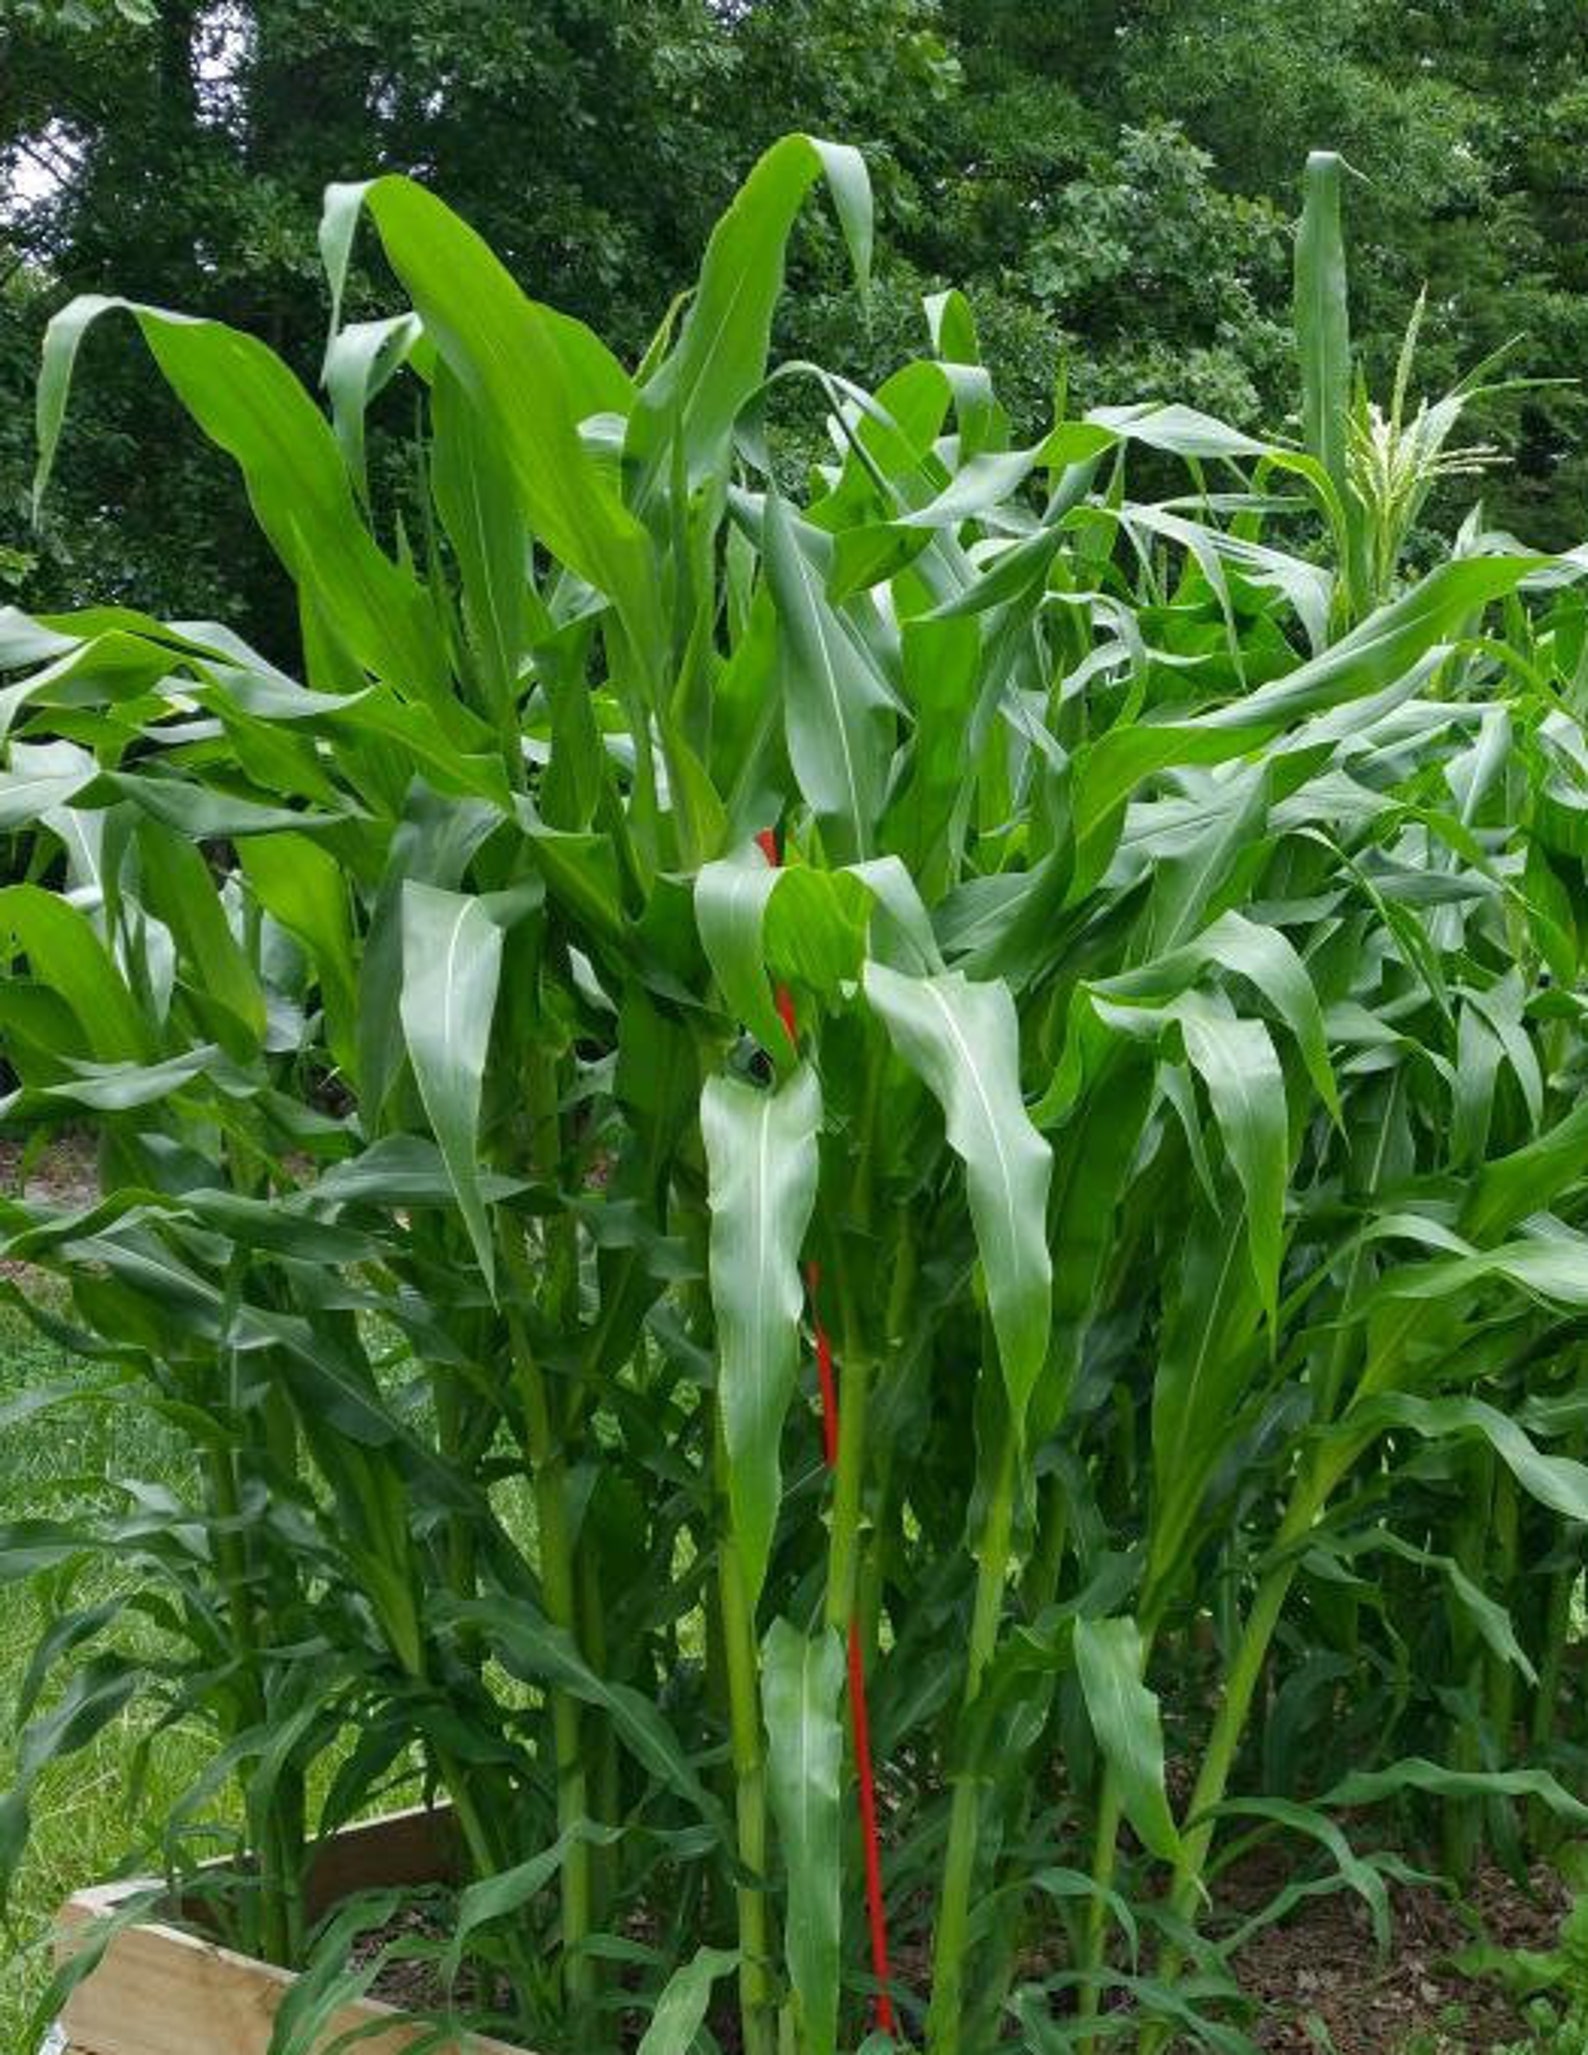 White Waxy Corn 50 Seeds High Glutinous Organic Sweet Corn Bap Etsy